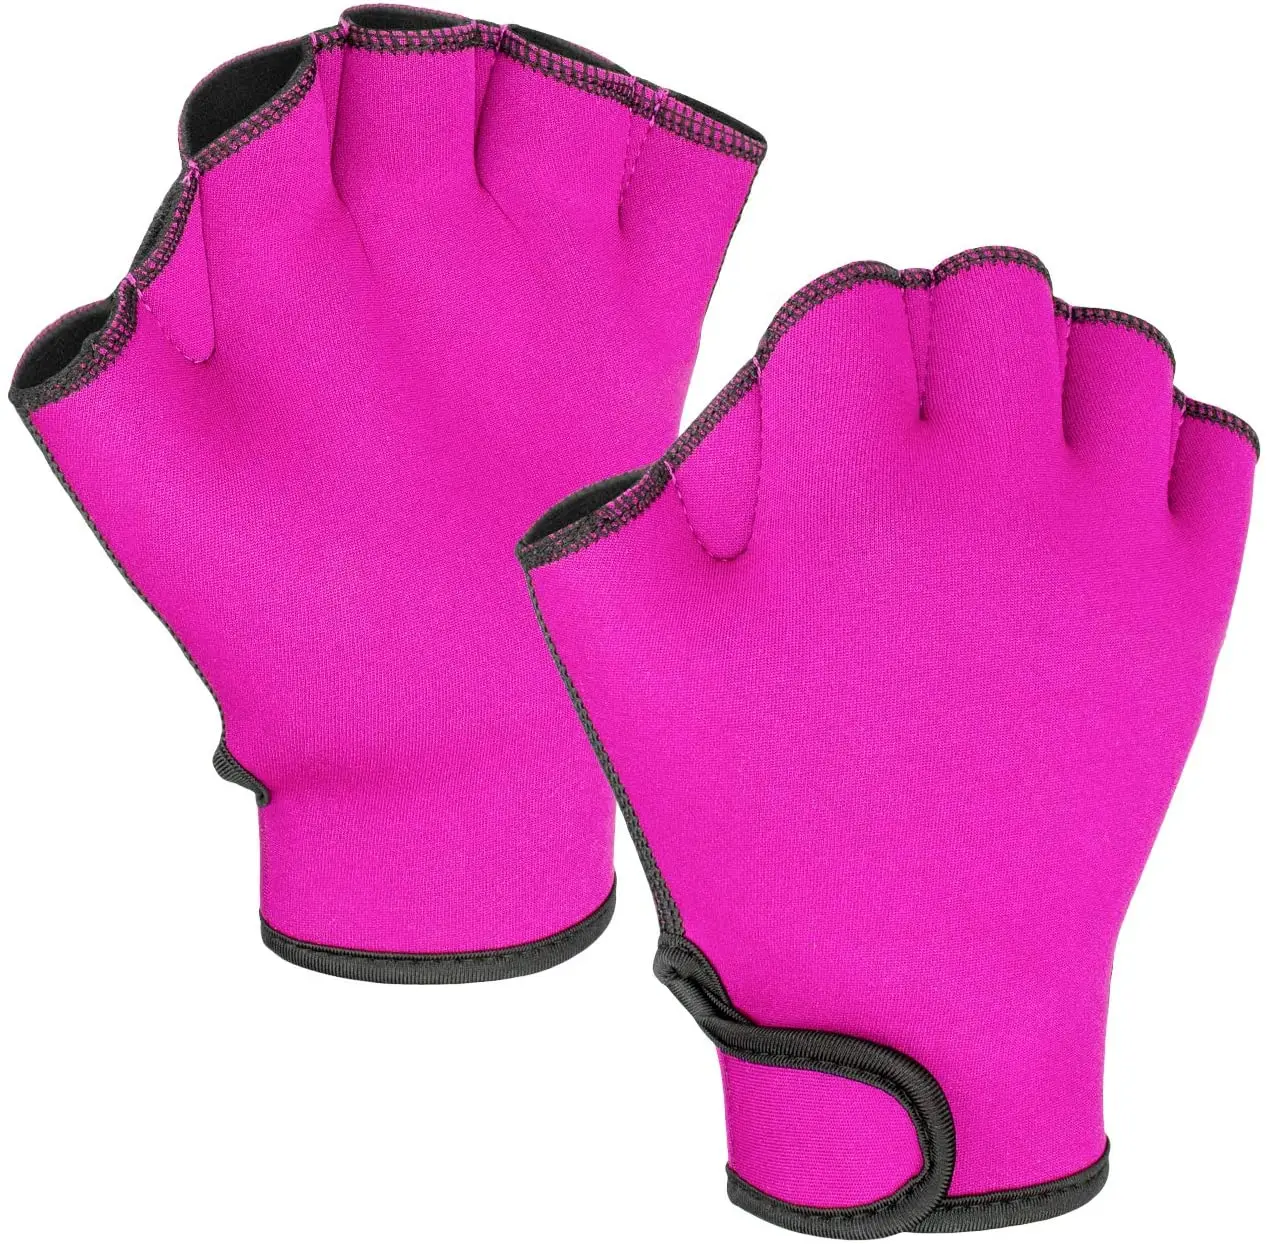 FitsT4 Aqua Gloves Webbed Paddle Swim Gloves Fitness Water Aerobics and Water Resistance Training for Men Women Children 